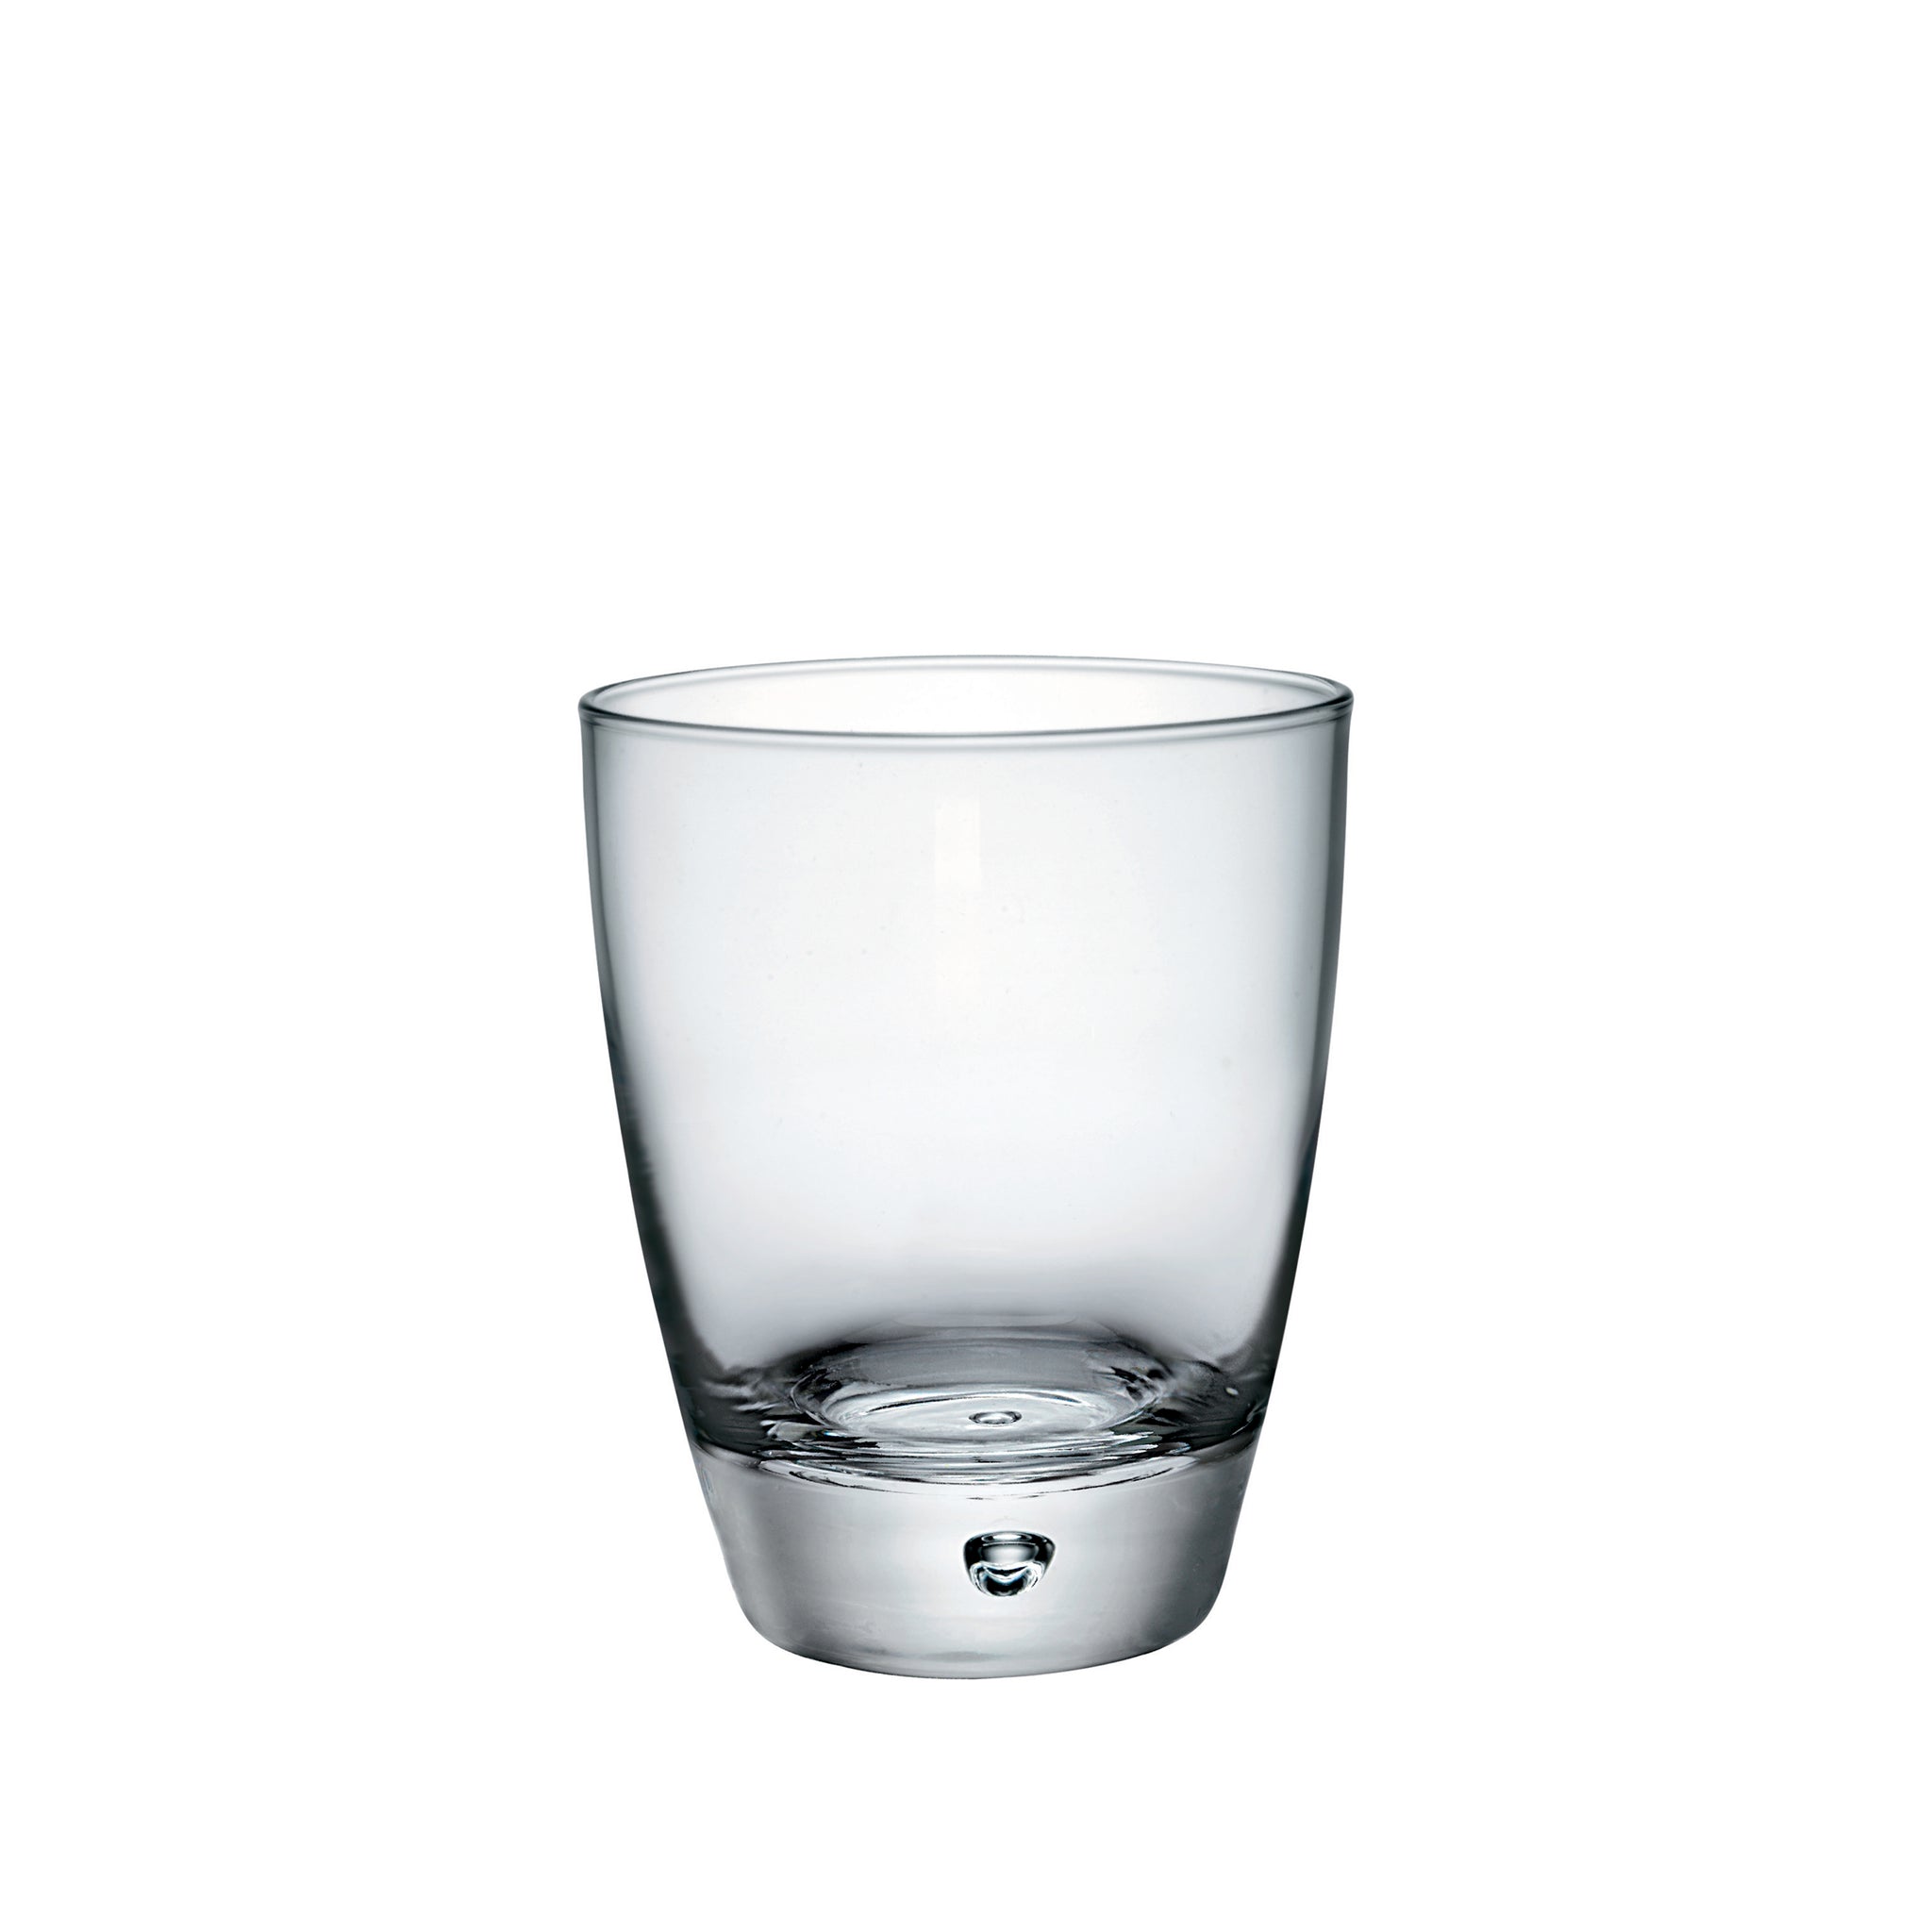 Luna 11.75 oz. DOF Drinking Glasses (Set of 4)